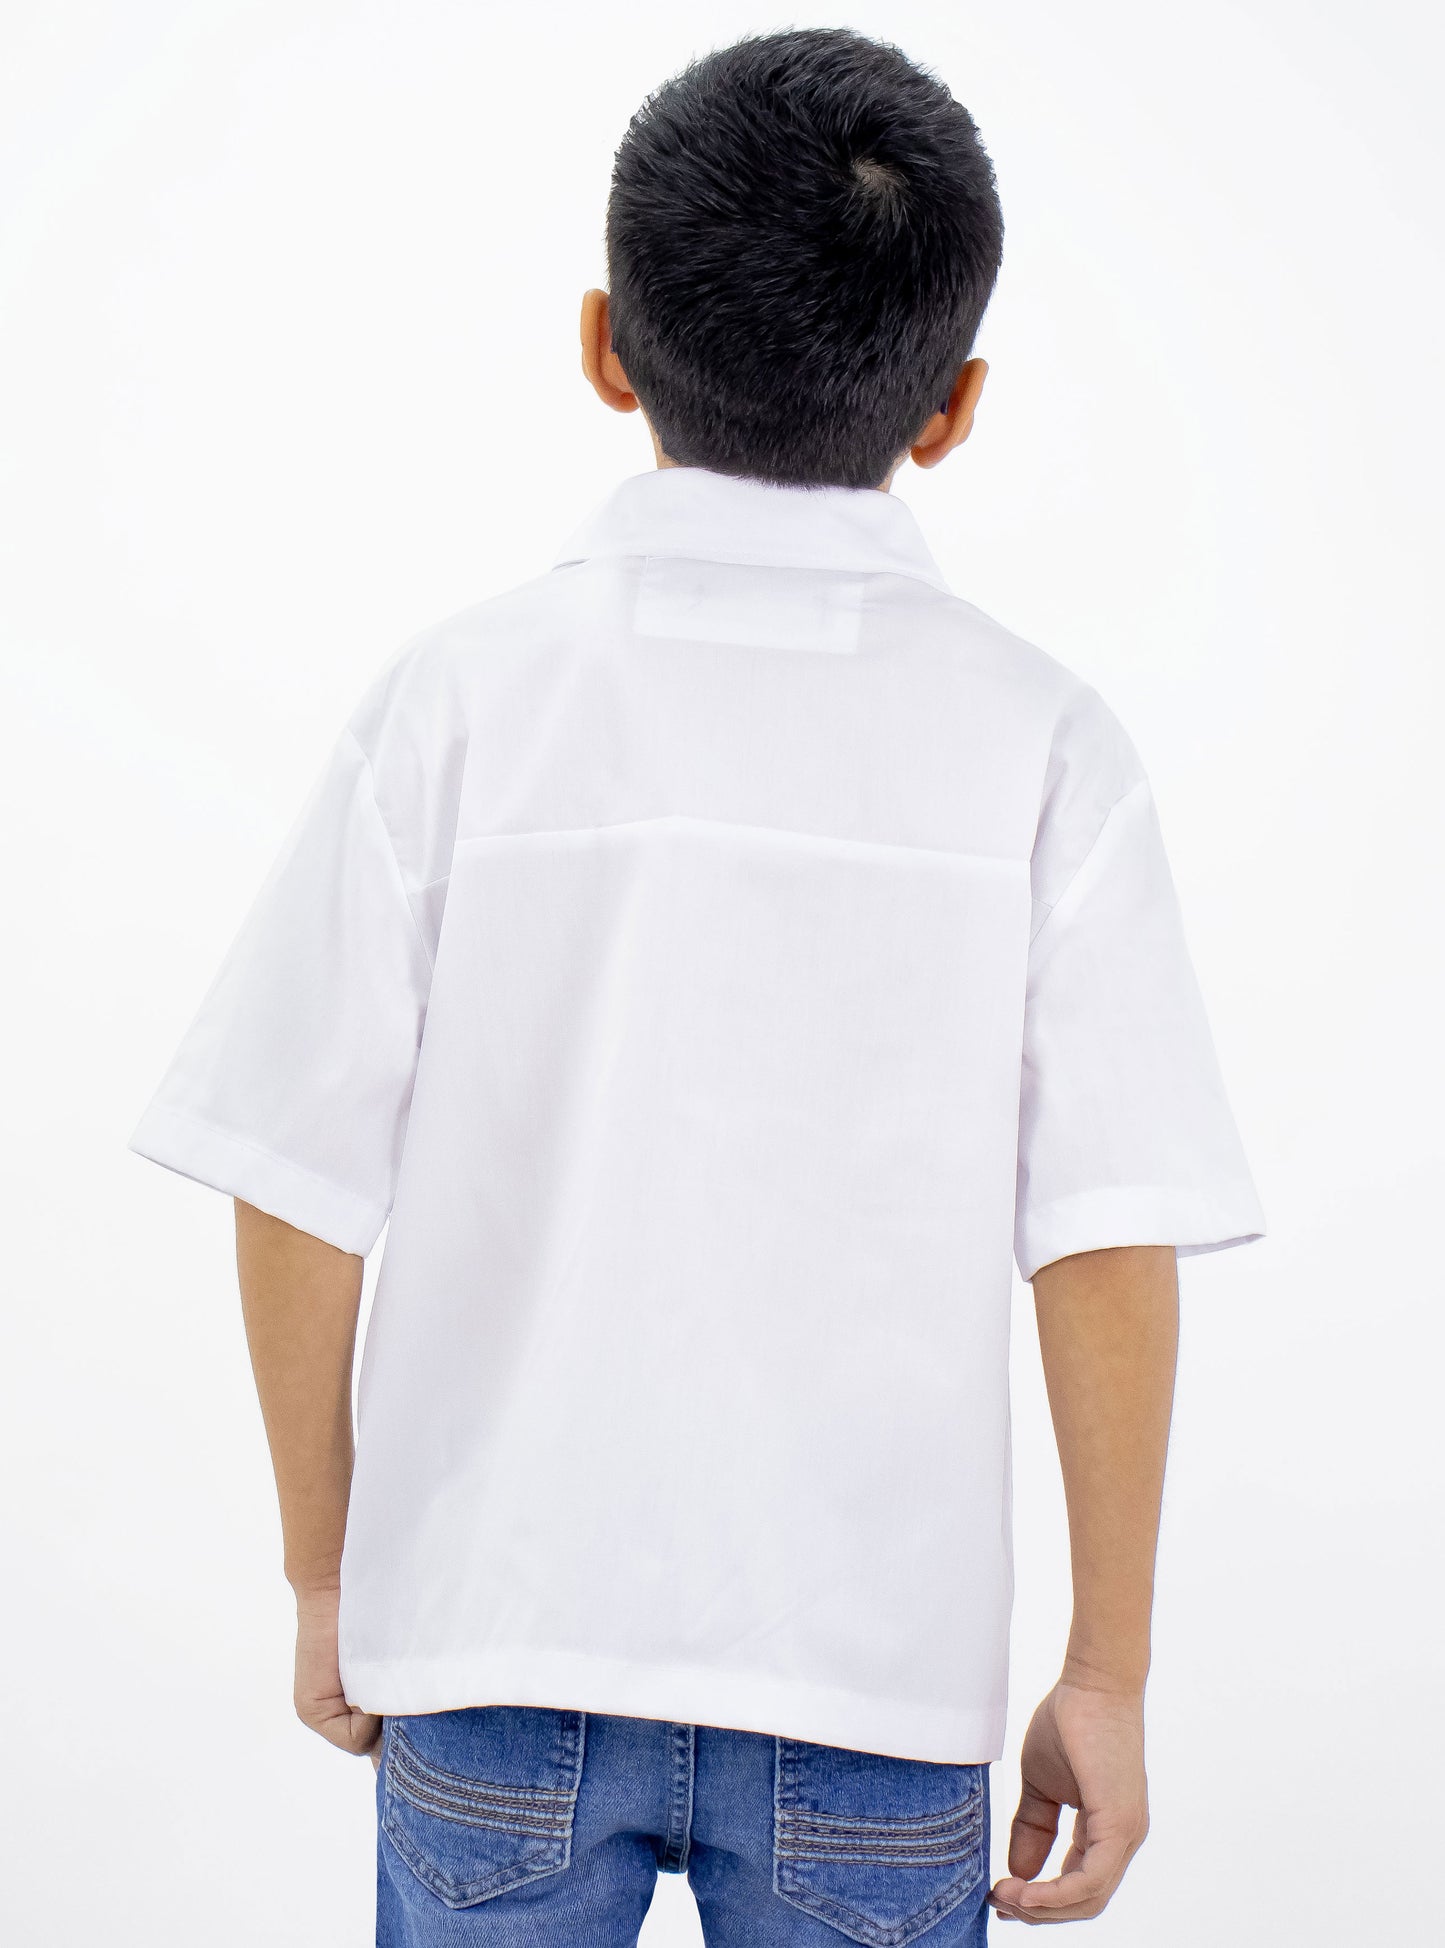 Camisa manga corta de color blanco